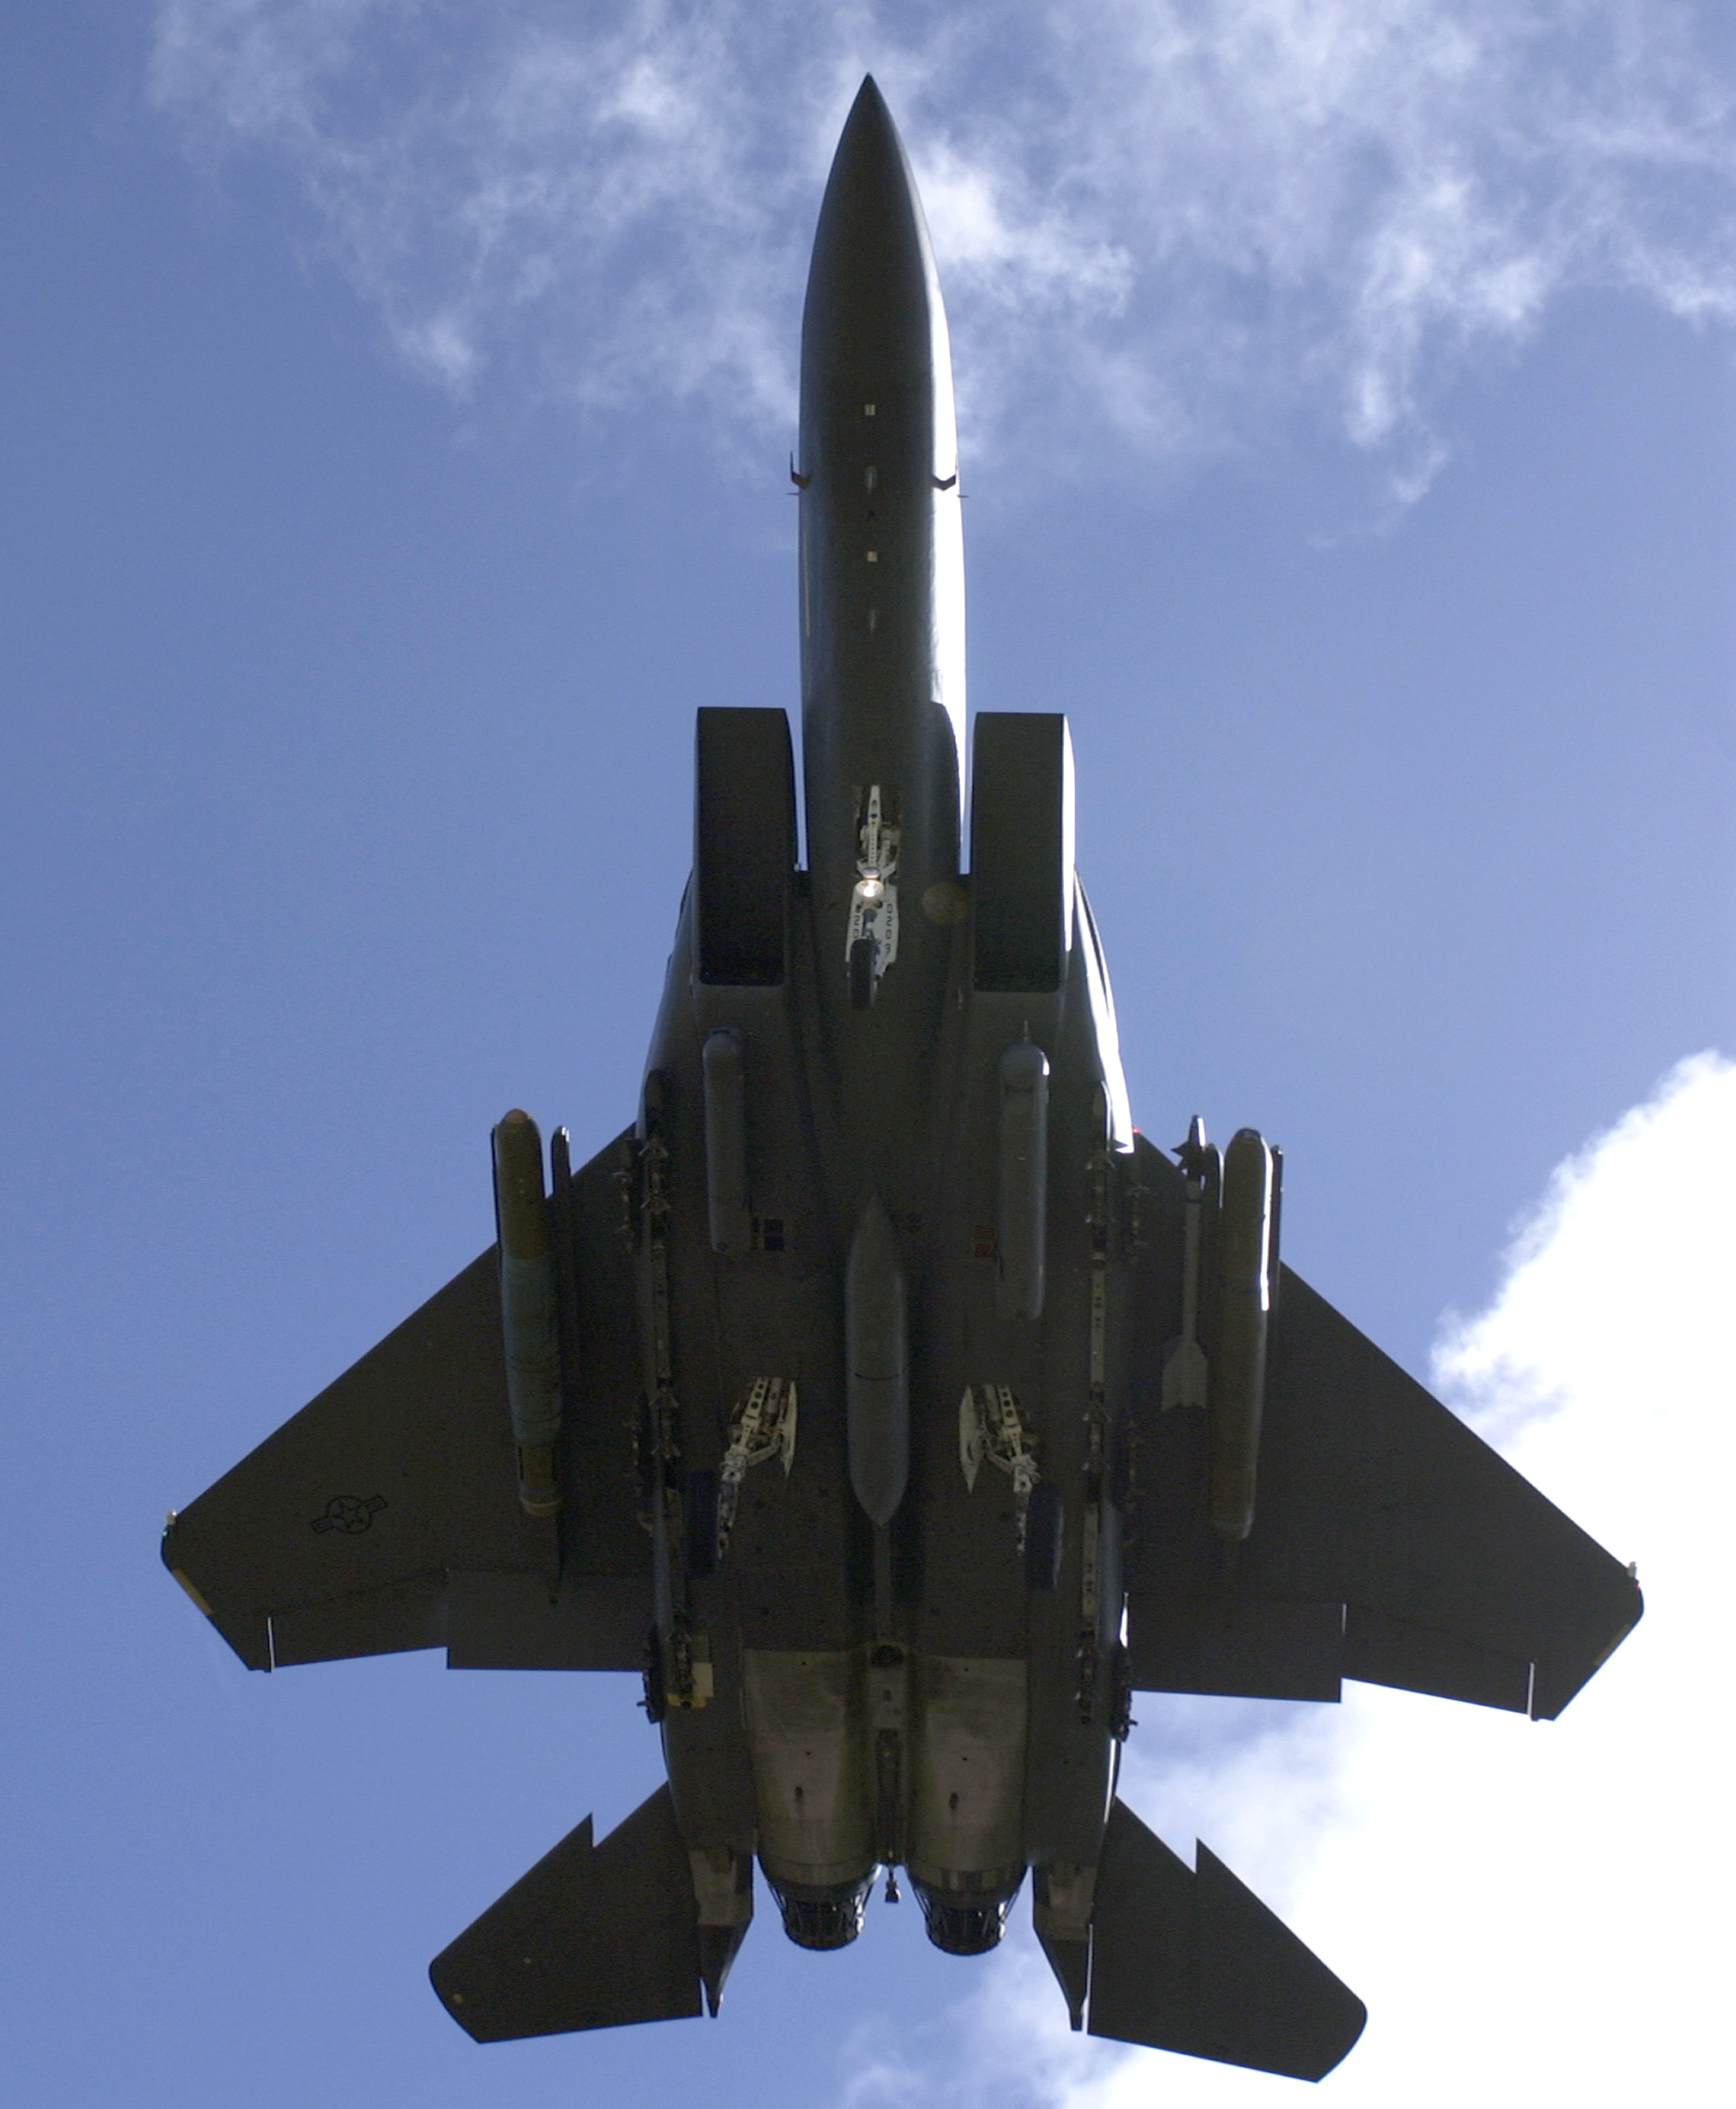 http://upload.wikimedia.org/wikipedia/commons/4/40/F-15E_Strike_Eagle_With_Landing_Gear_Down_Underside_View.jpg